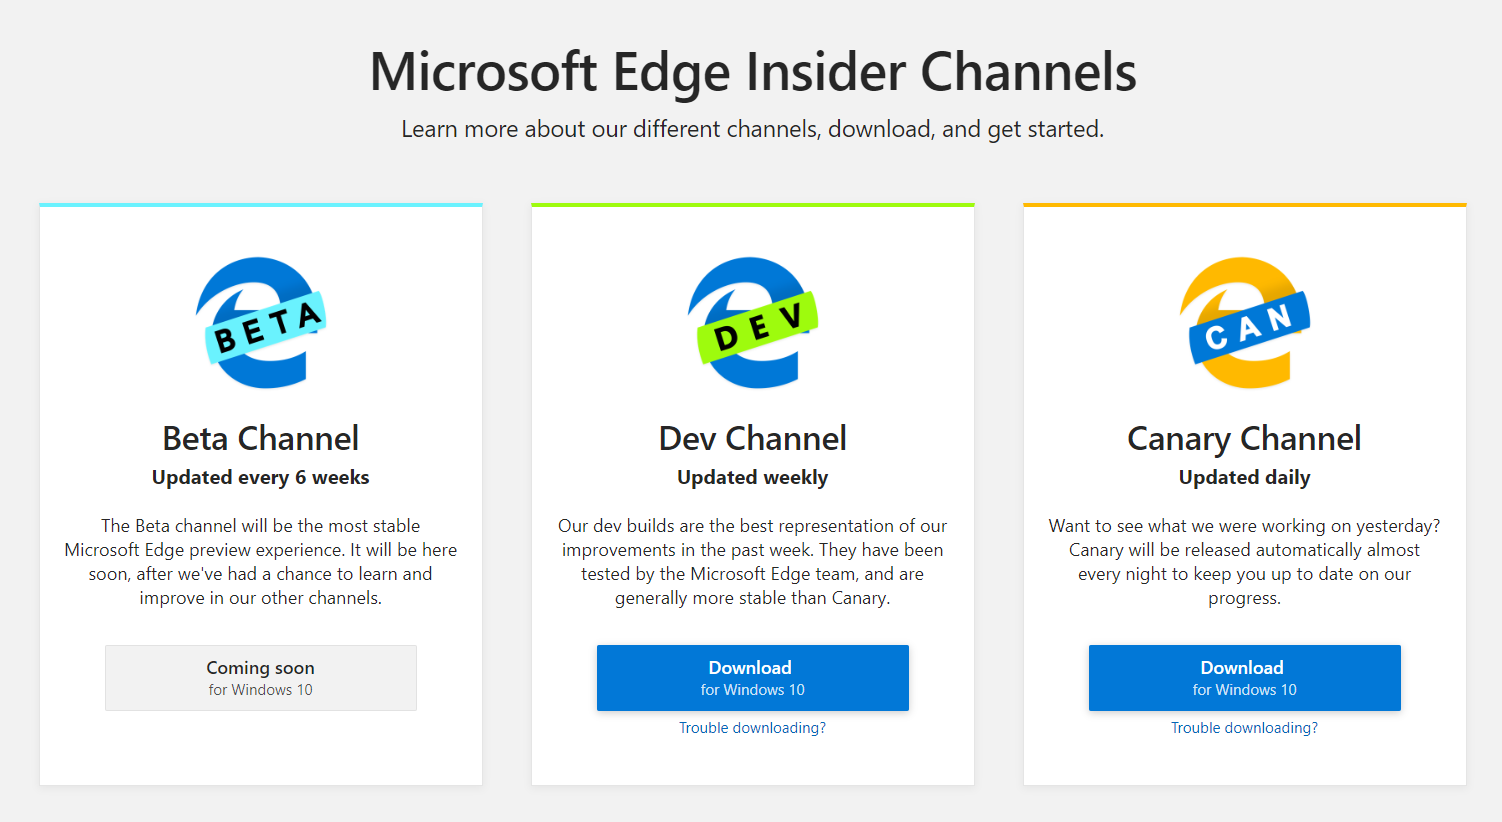 Microsoft Edge insider channels